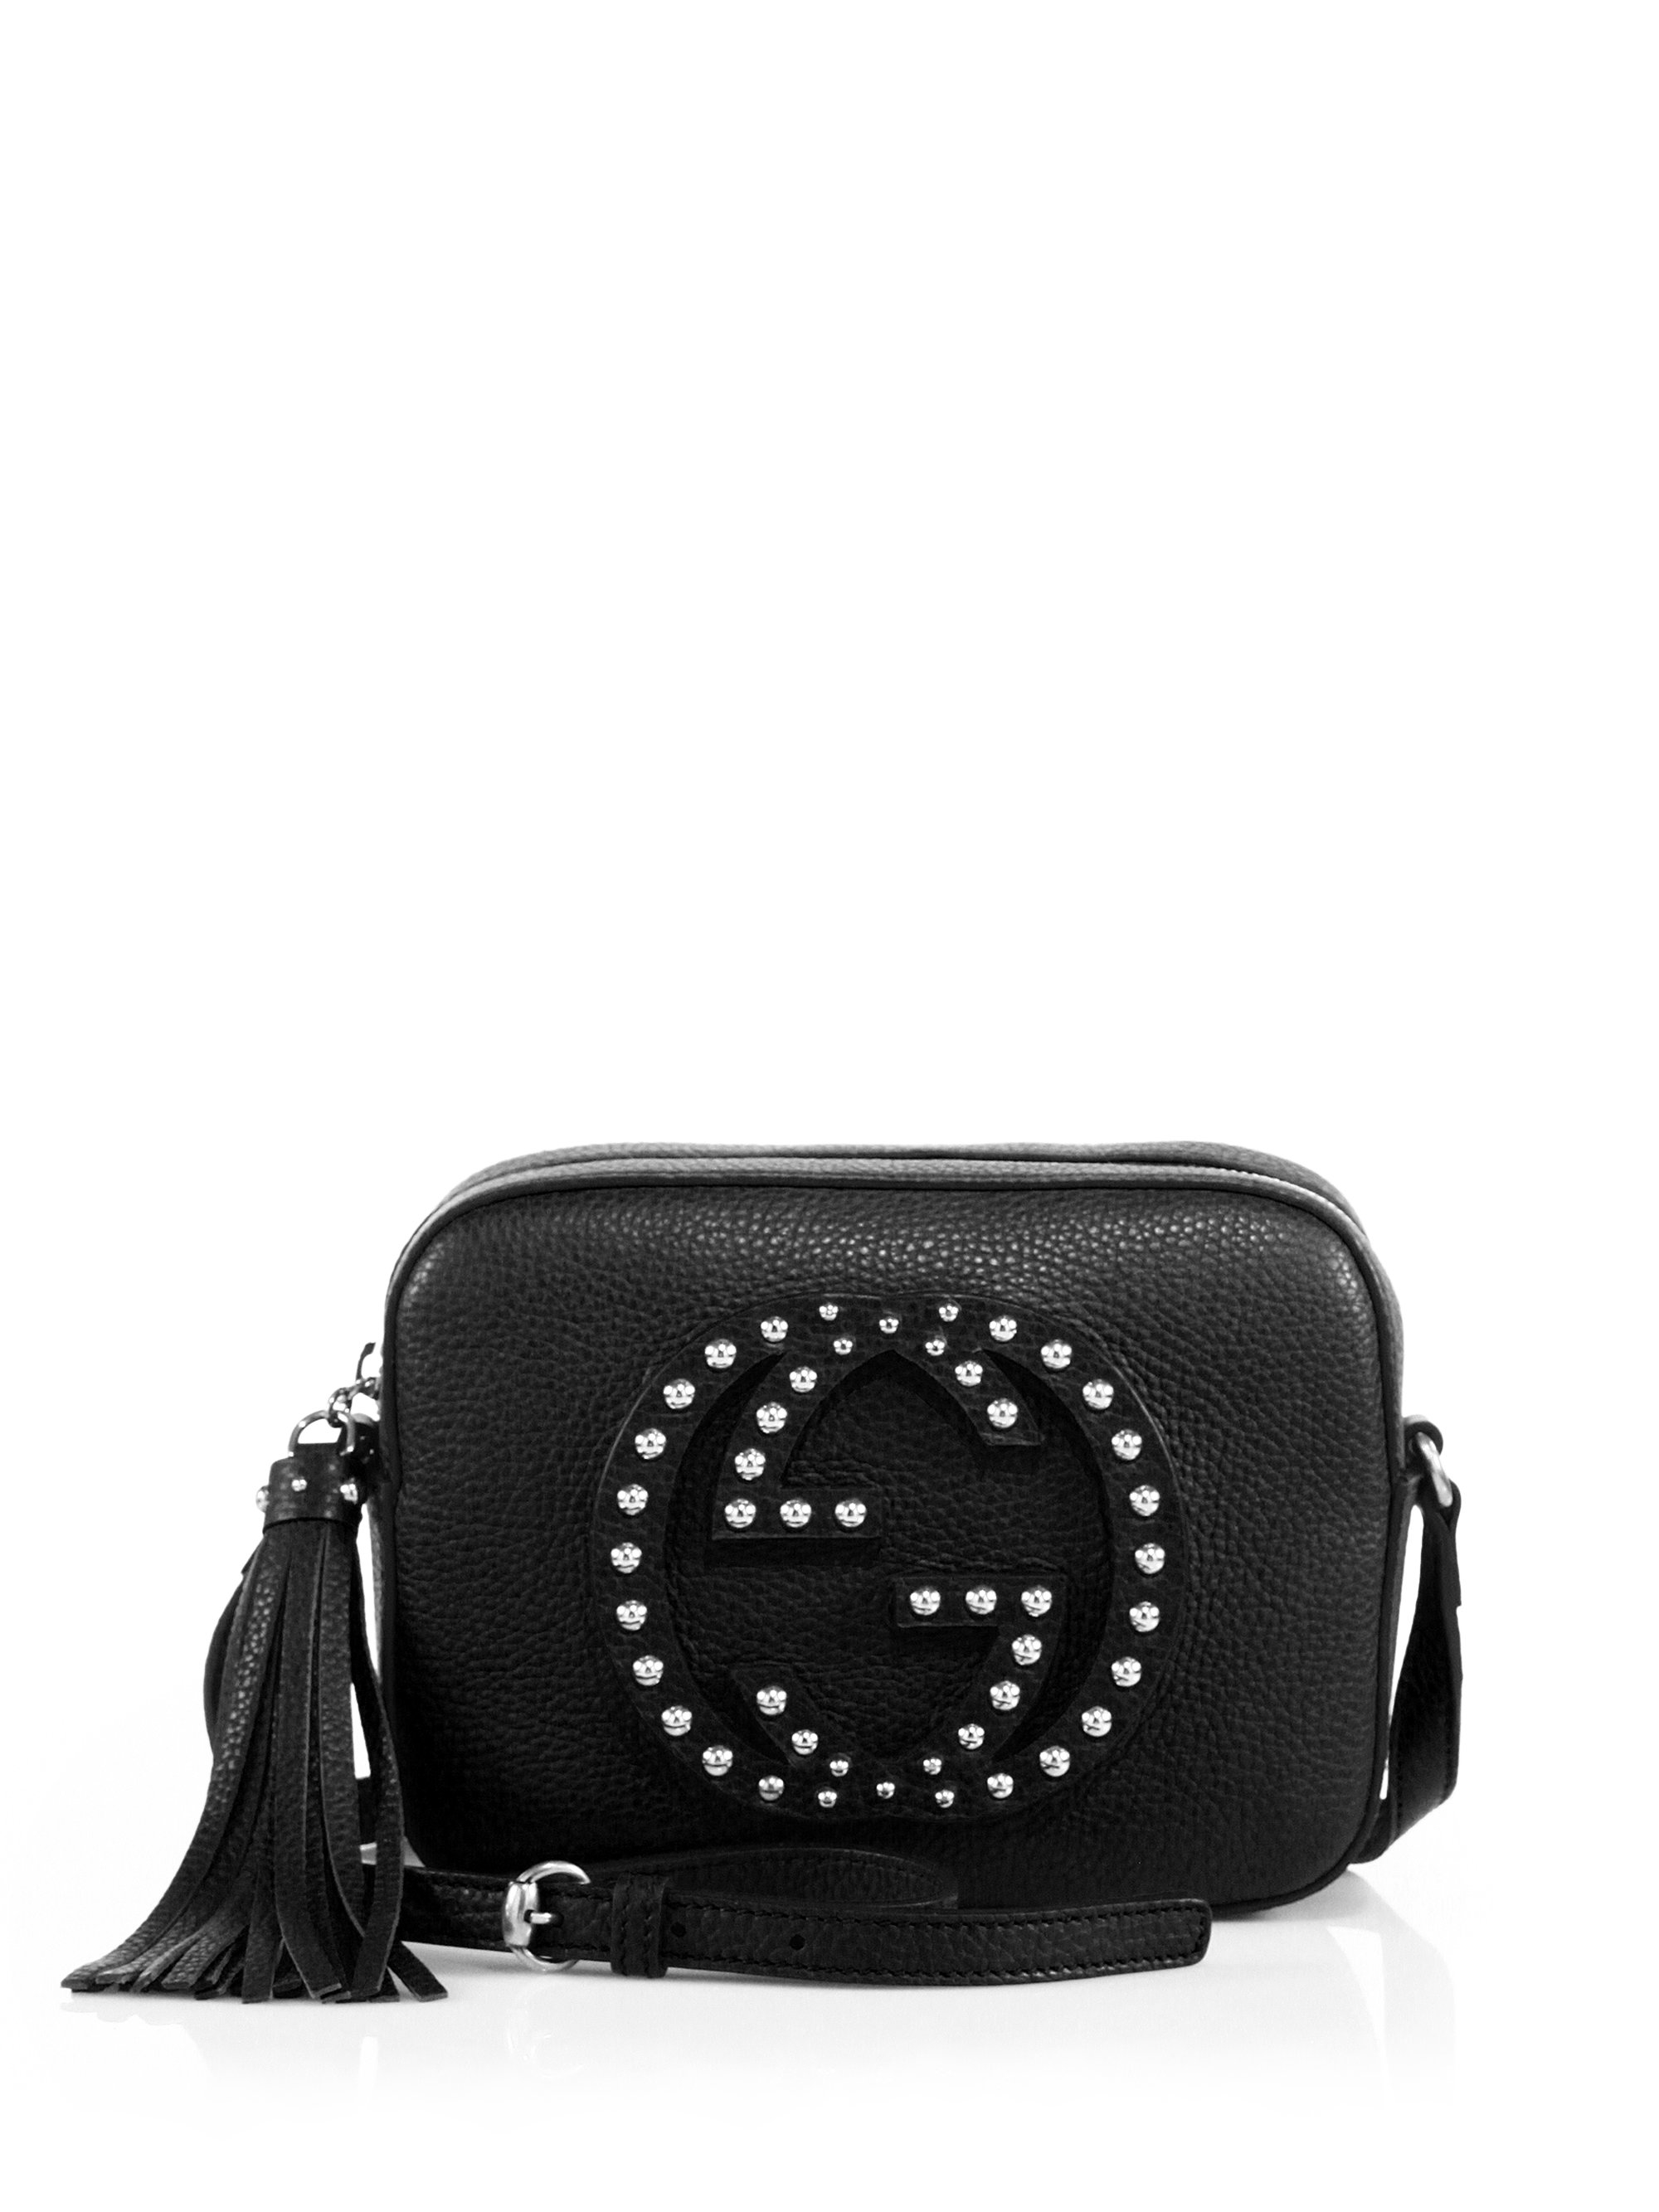 Gucci Soho Black Leather Bag | Paul Smith